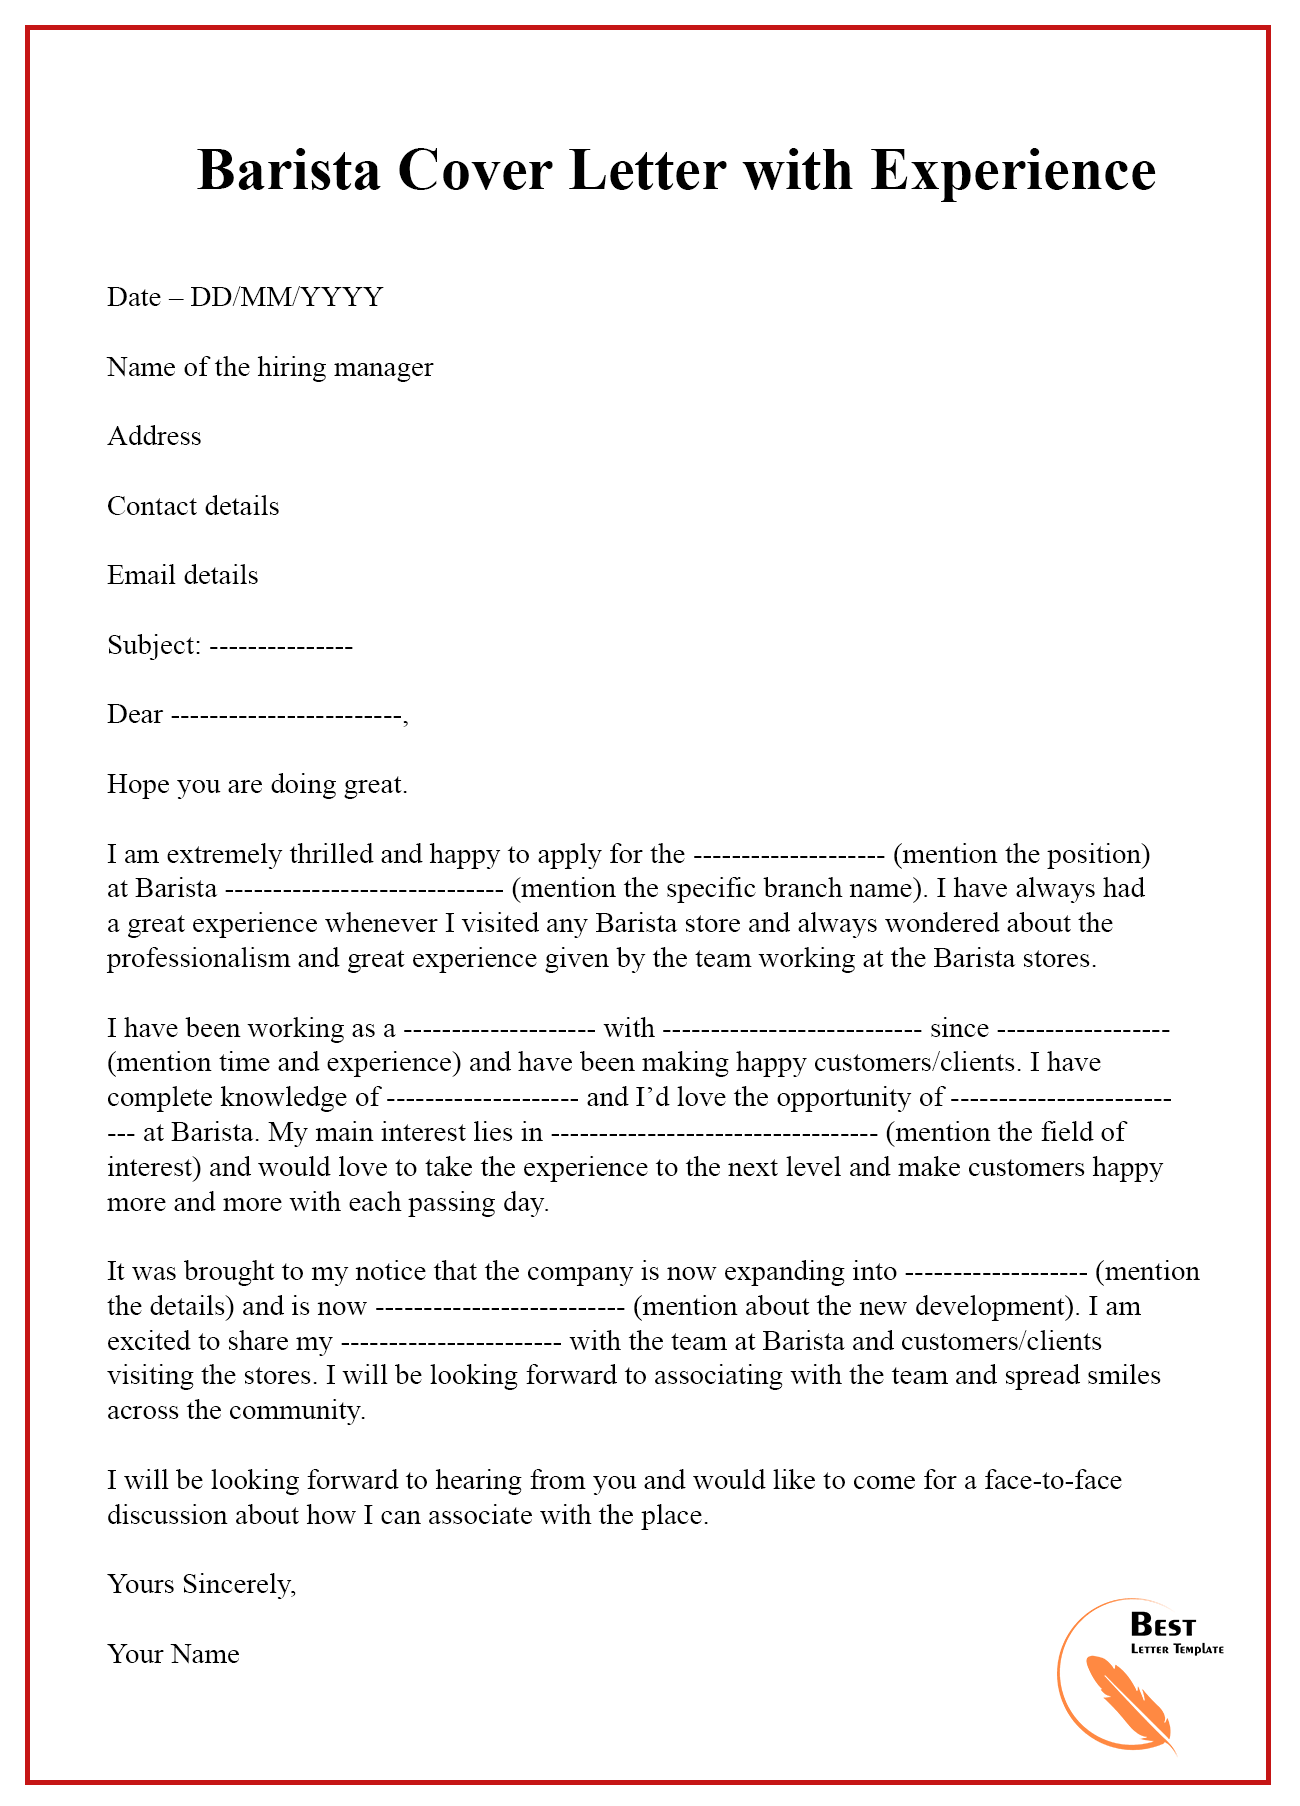 job application letter for barista